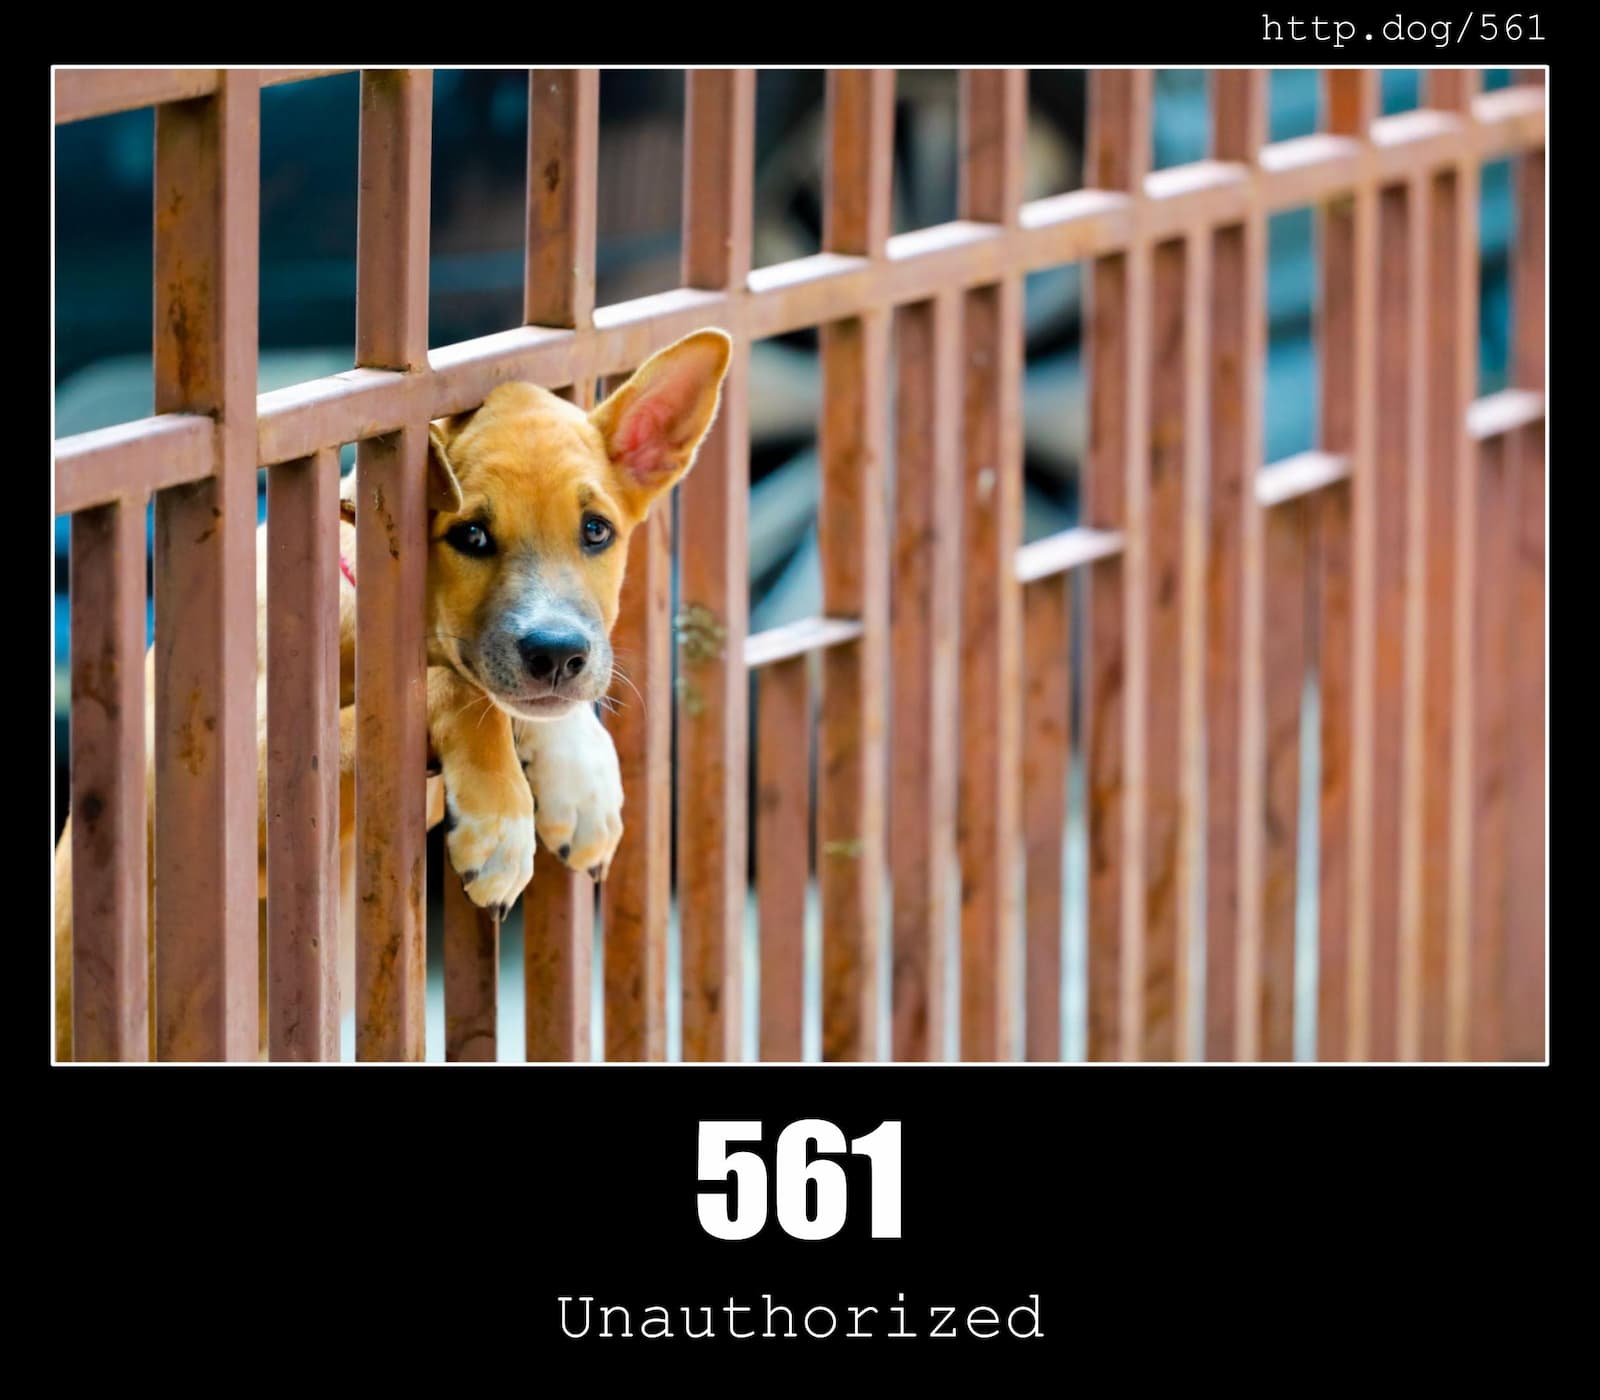 HTTP Status Code 561 Unauthorized & Dogs